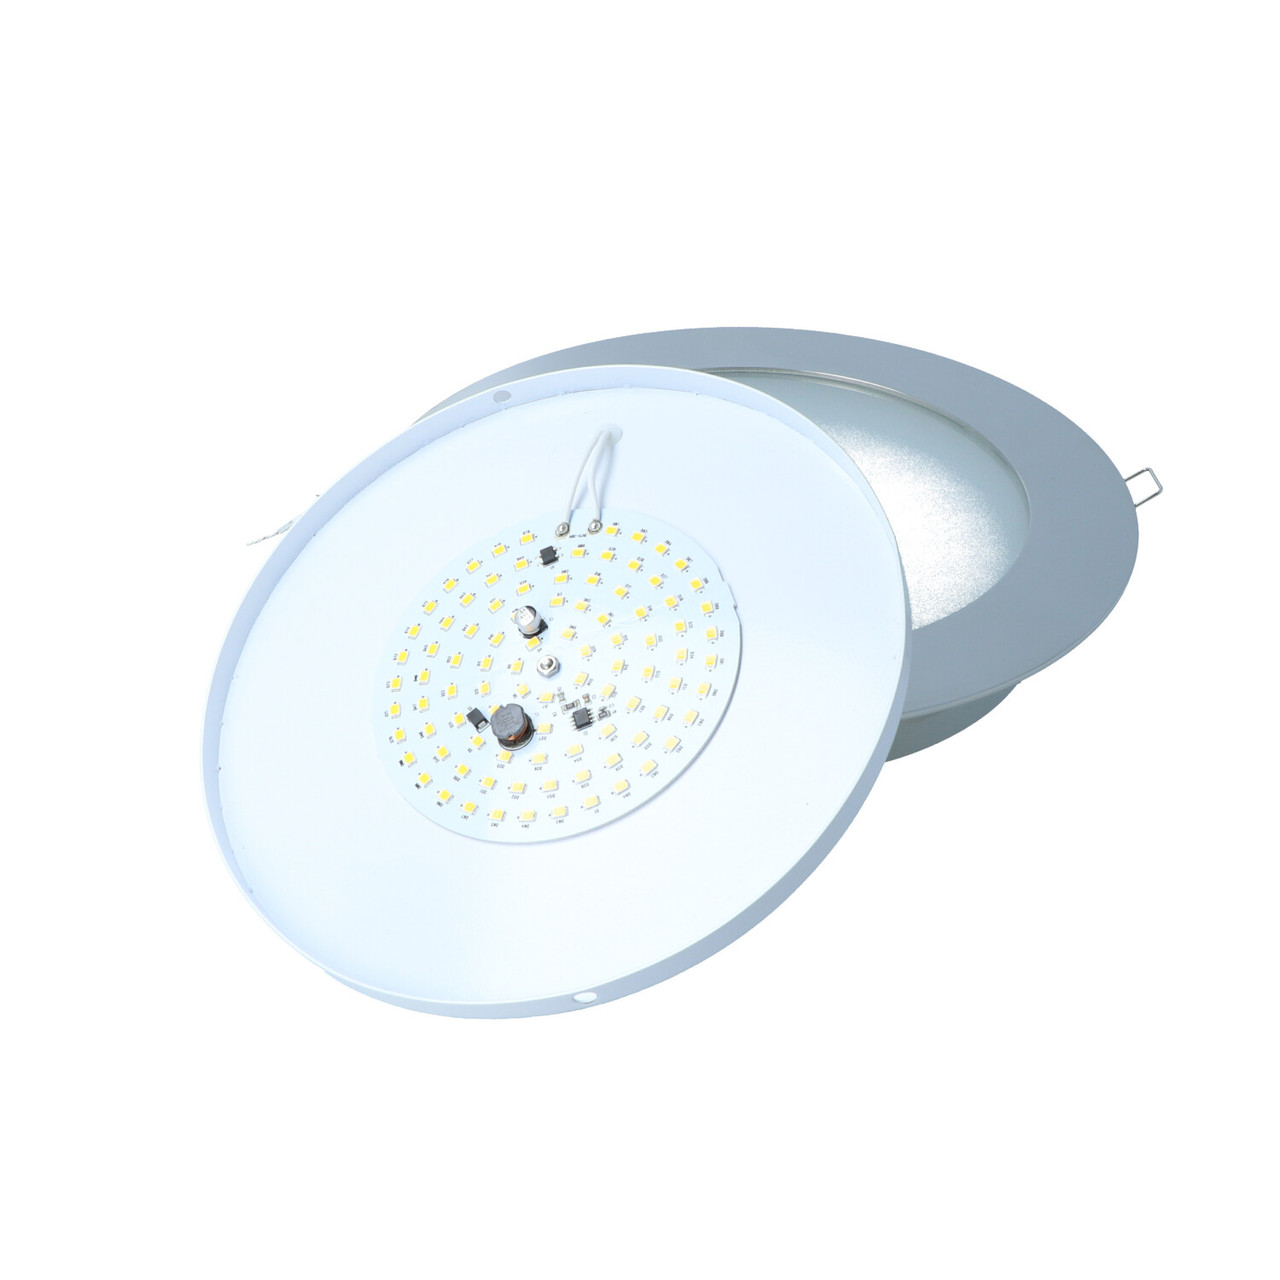 Mega LED - Samos LED Downlight - For 2 x G4 LED Bulbs, Recessed Mounting (SAMOS) - Apollo Lighting